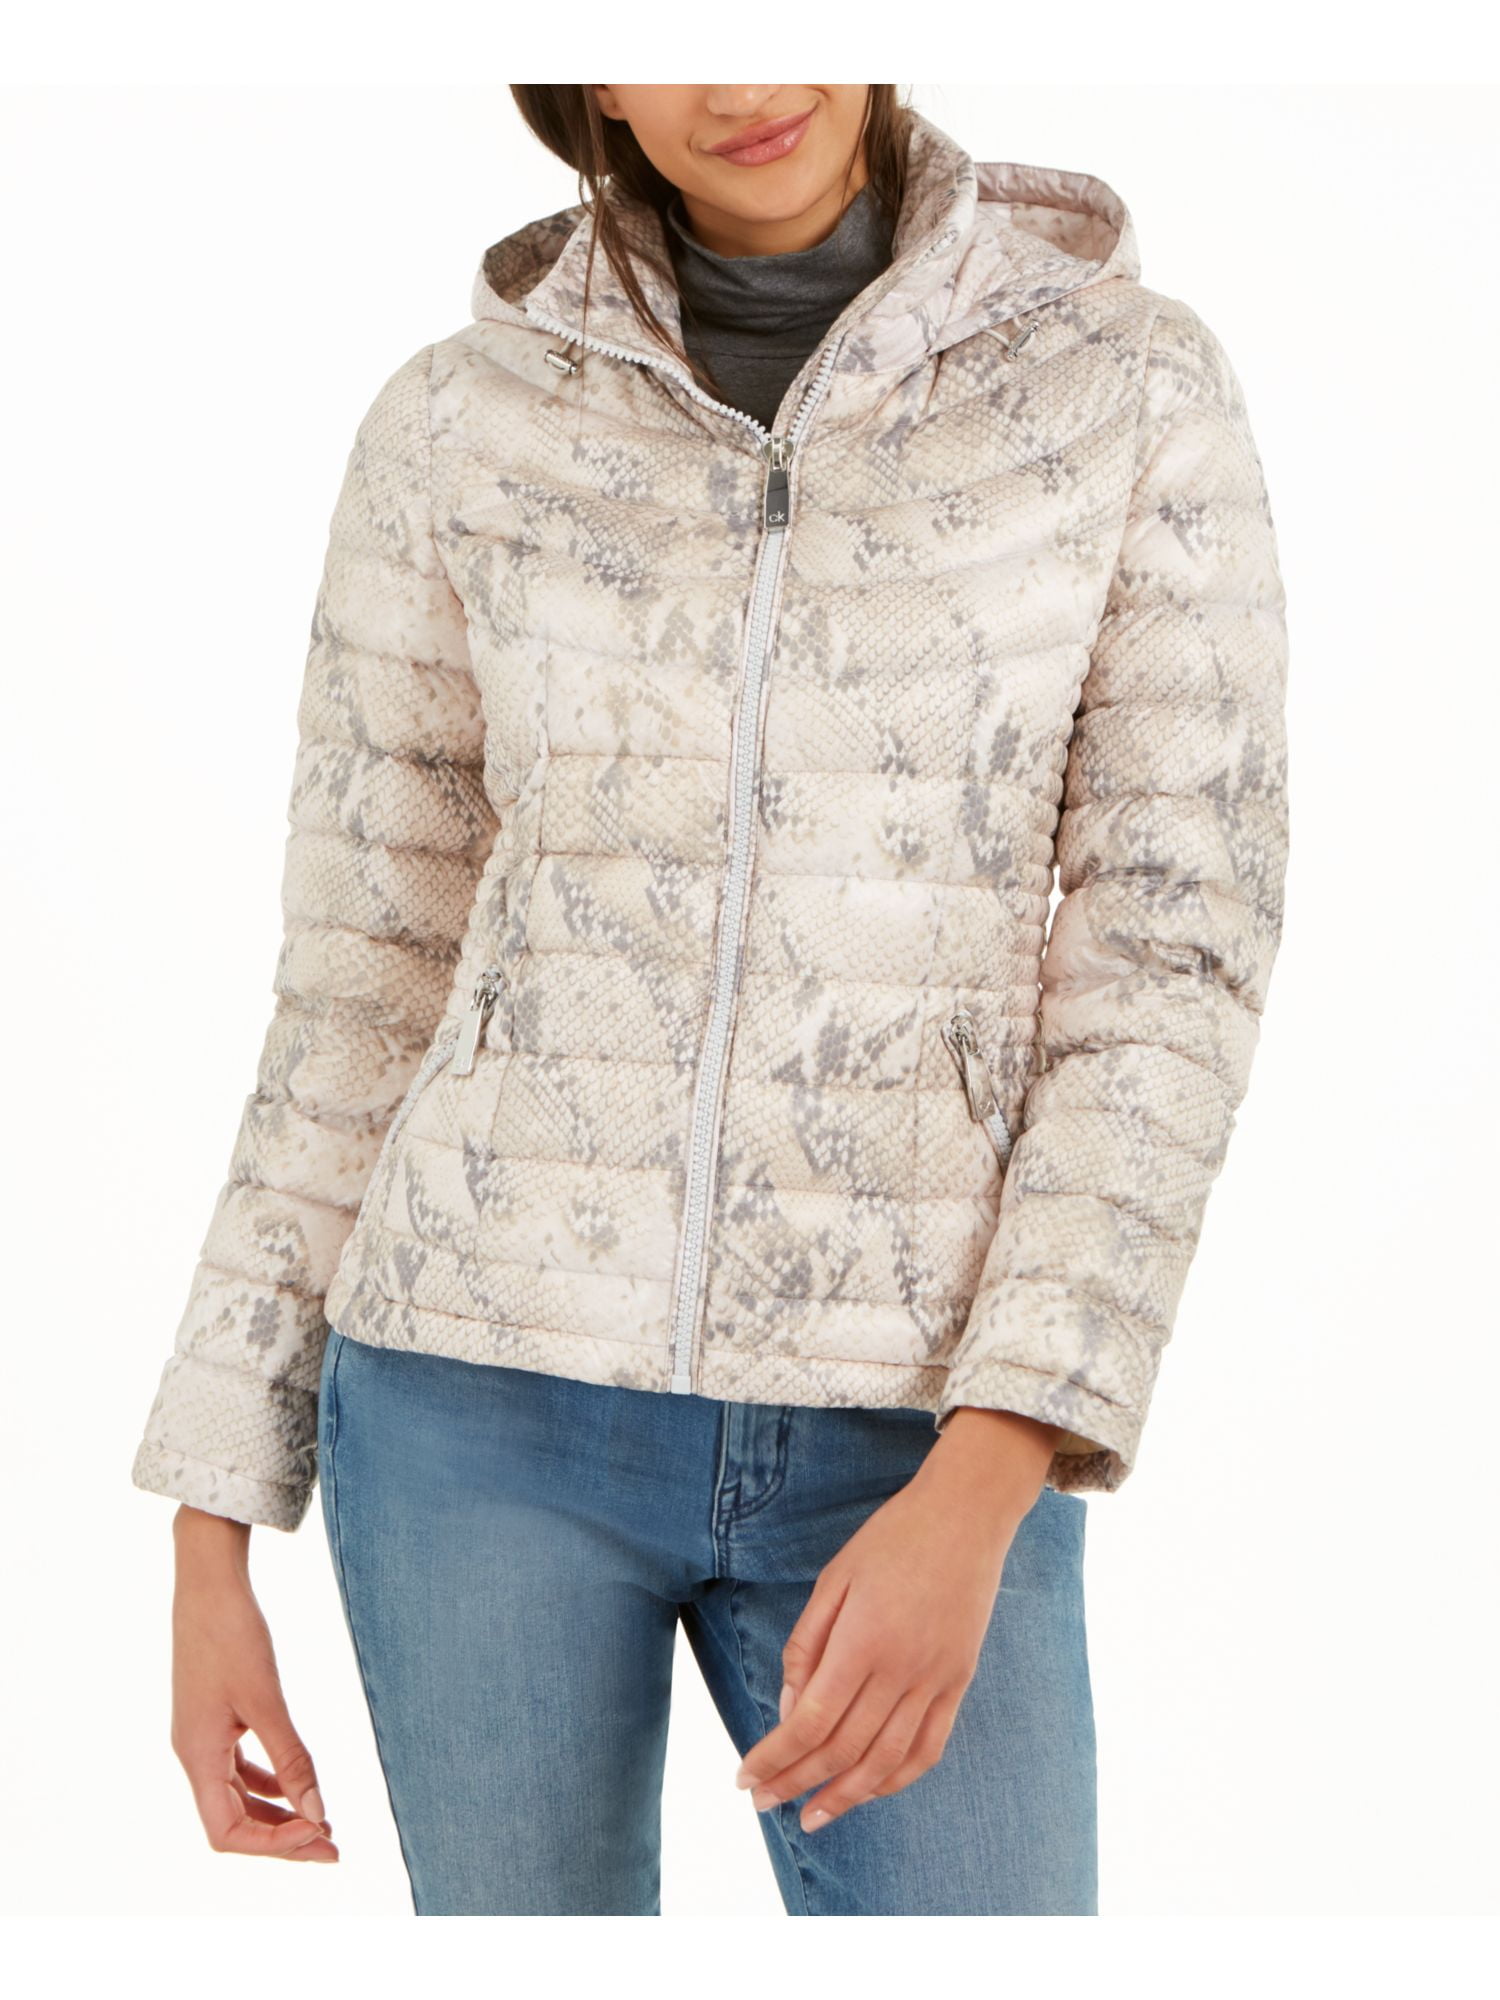 CALVIN KLEIN Womens Beige Pocketed Zippered Hooded Puffer Winter Jacket Coat  XL 